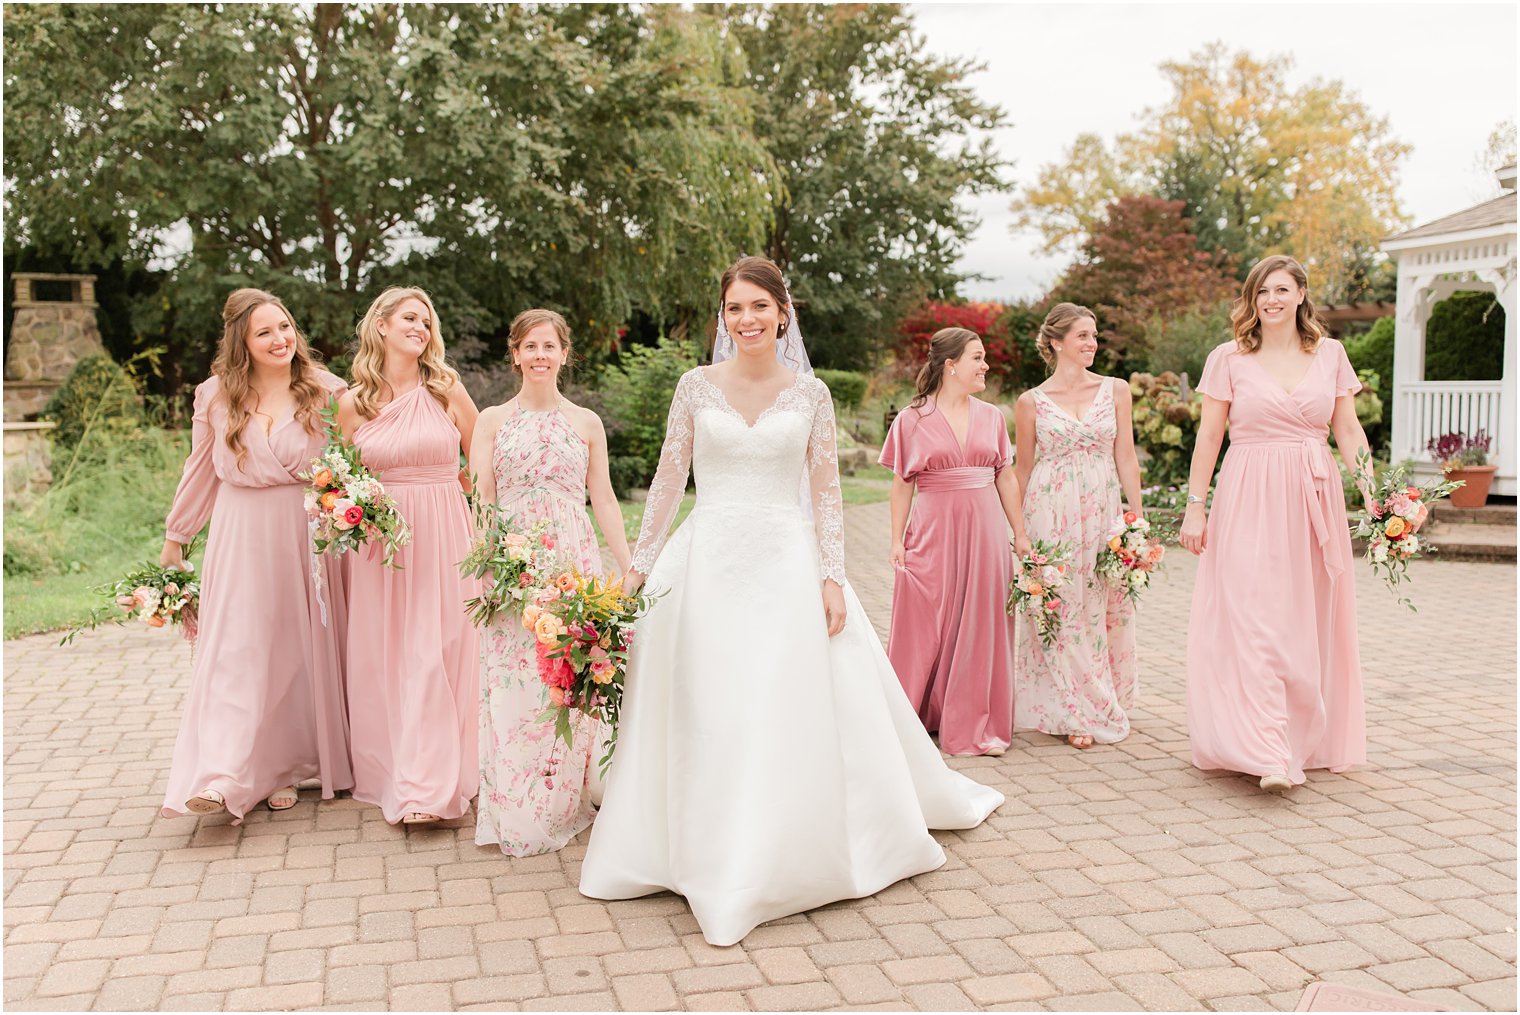 bride walks through gardens with bridesmaids in pink gowns